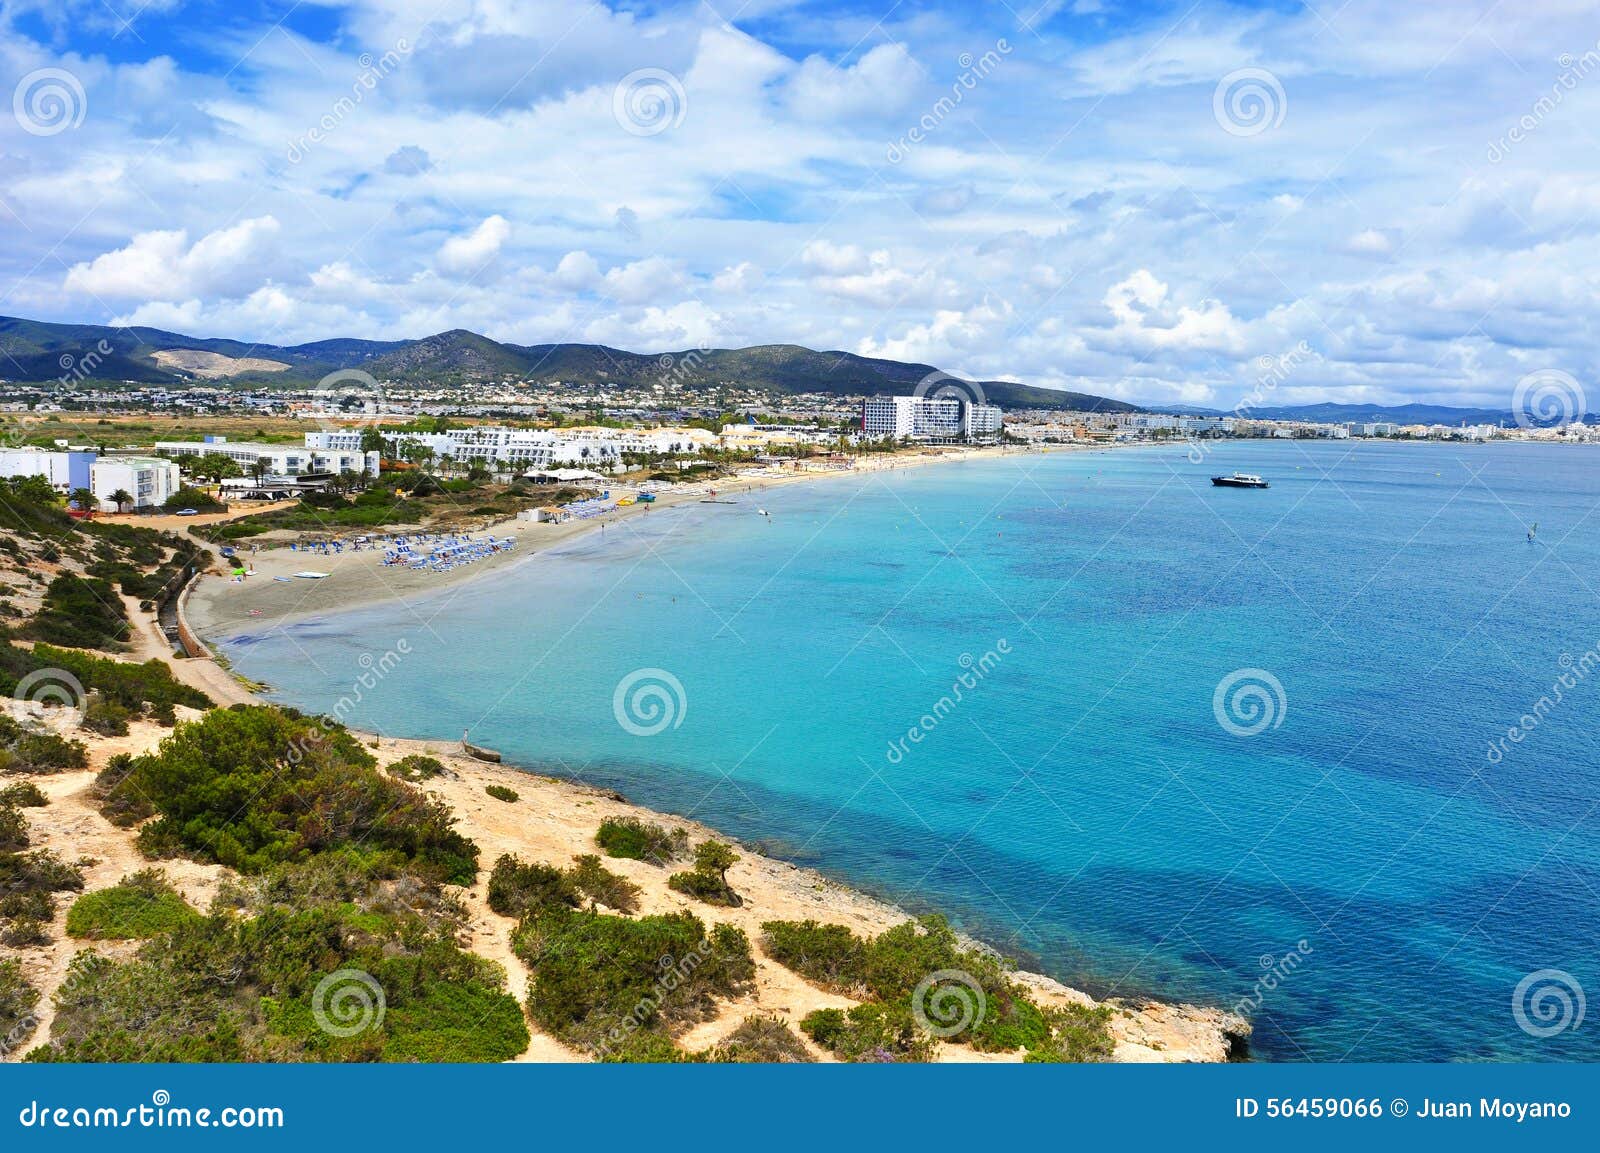 panoramic view of the platja den bossa beach in ibiza town, spain